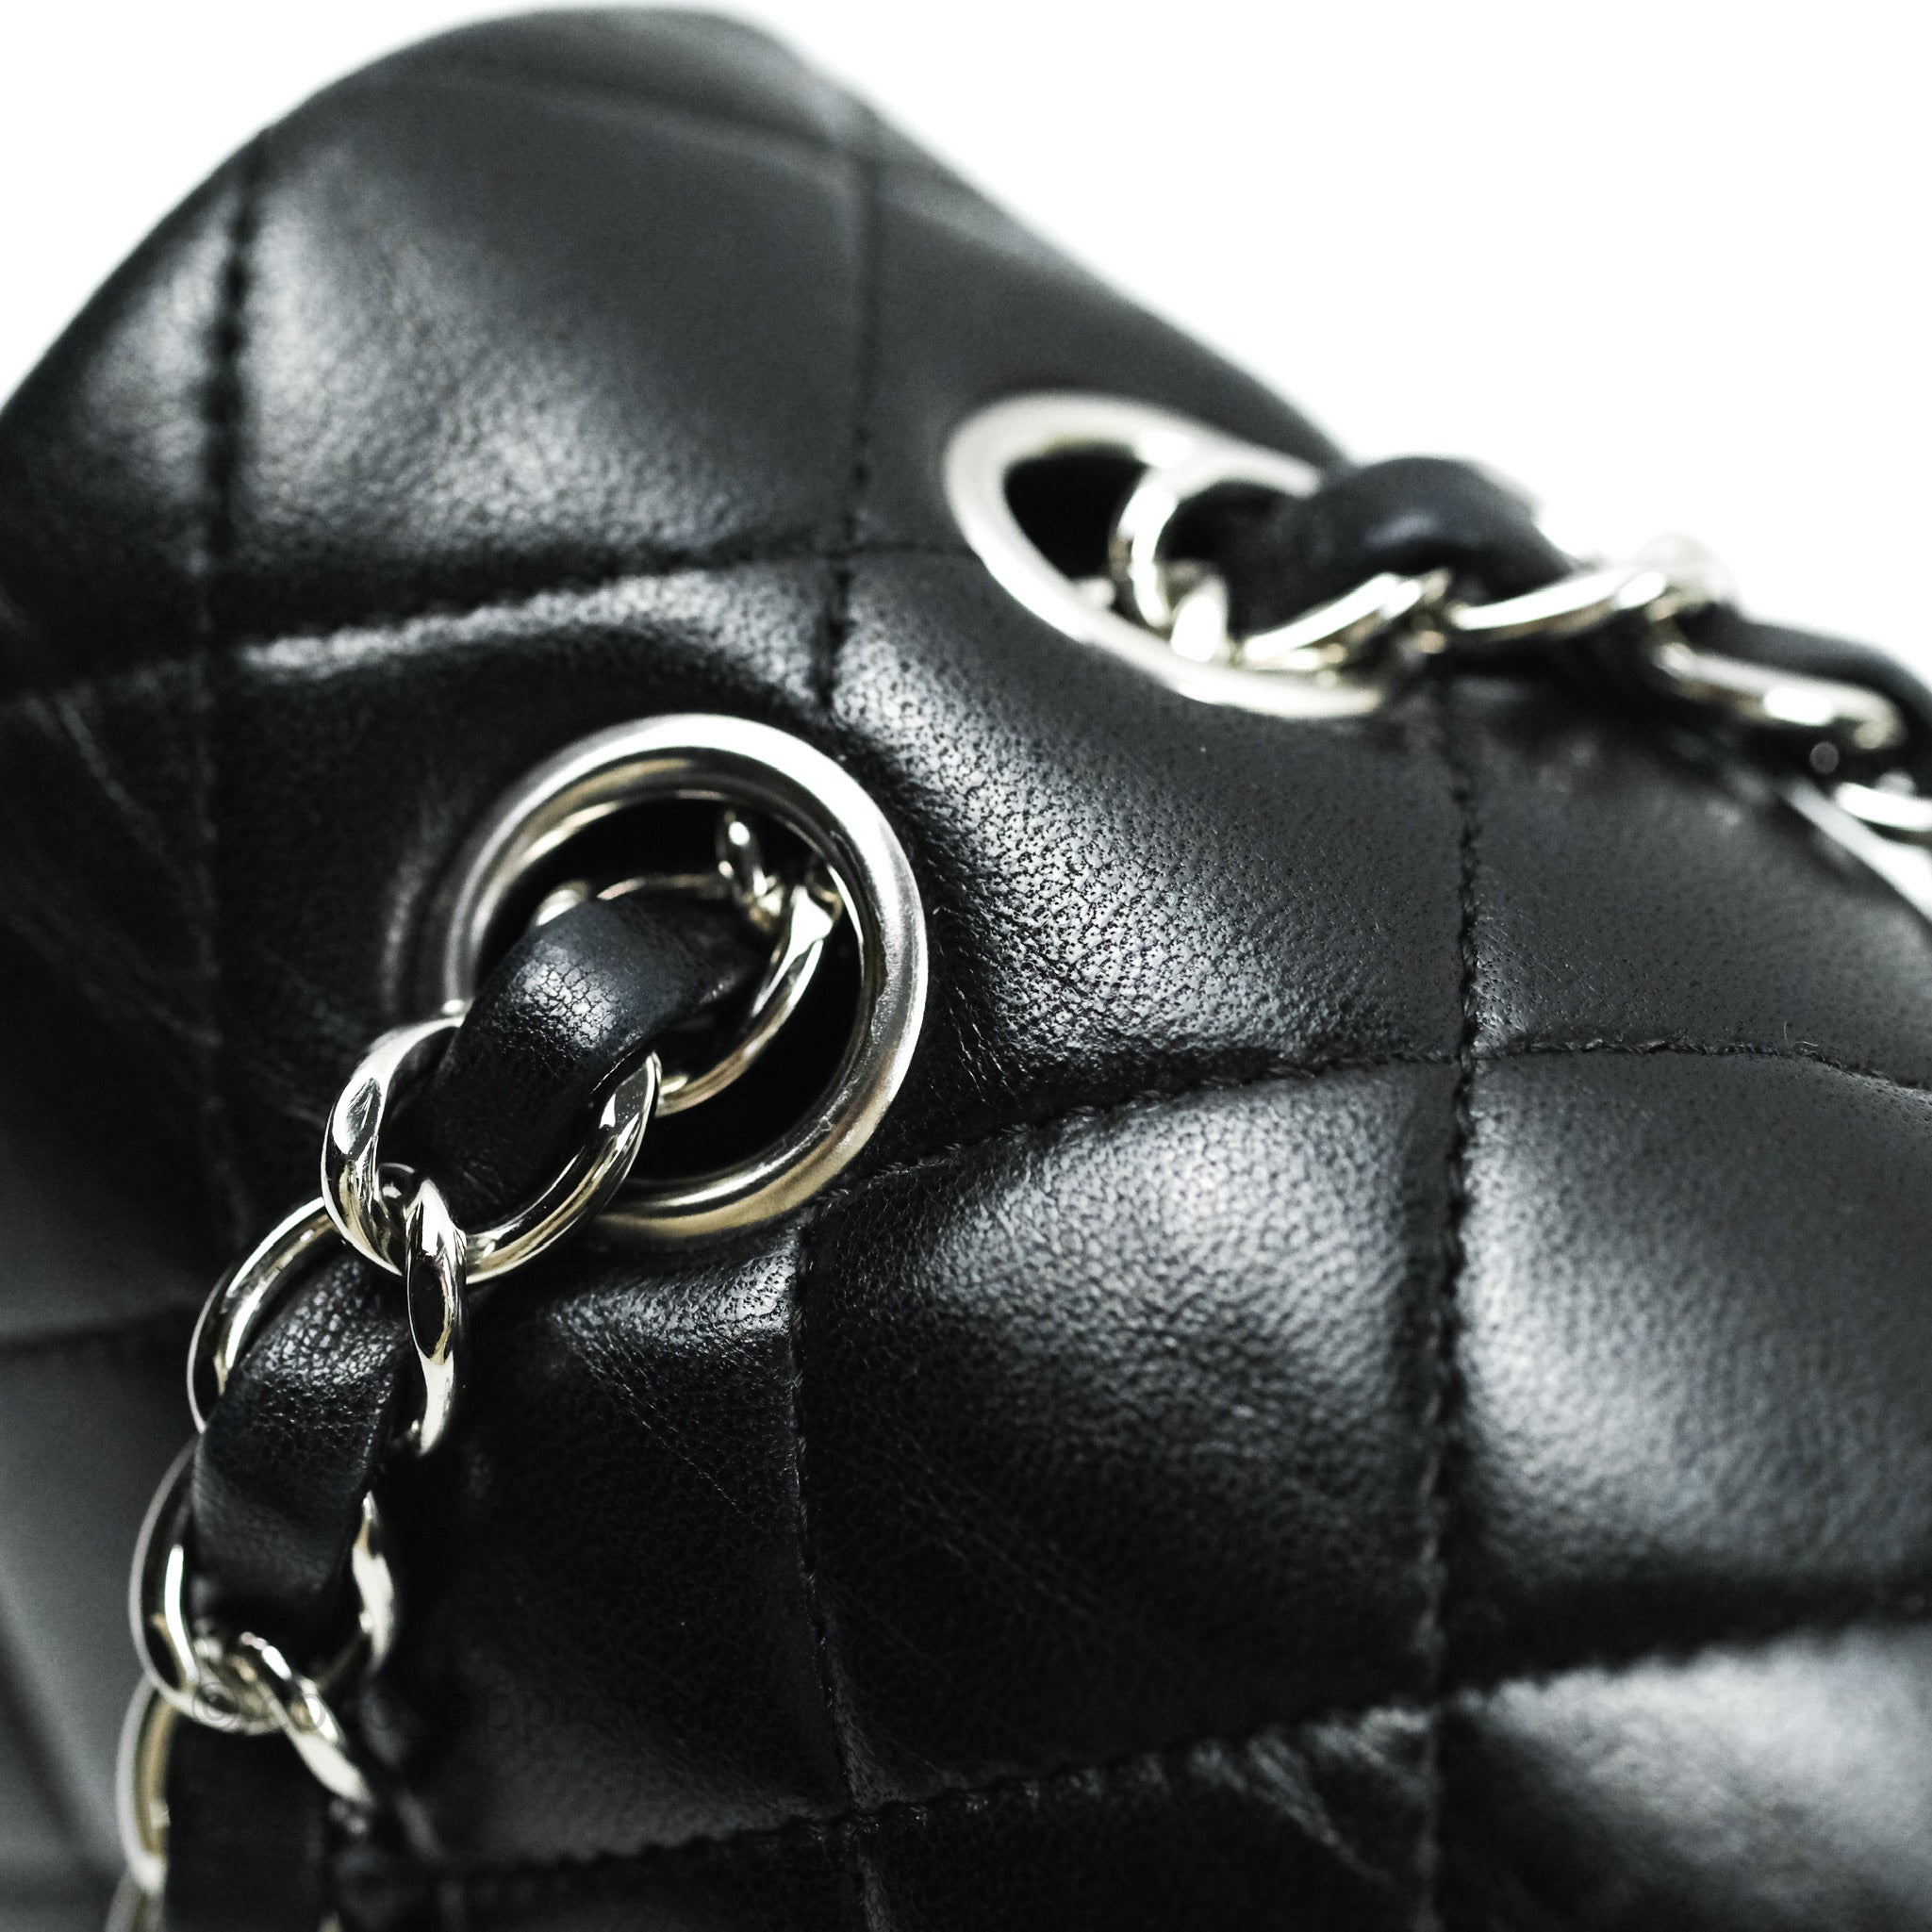 Chanel Classic M/L Medium Double Flap Black Lambskin Silver Hardware – Coco  Approved Studio